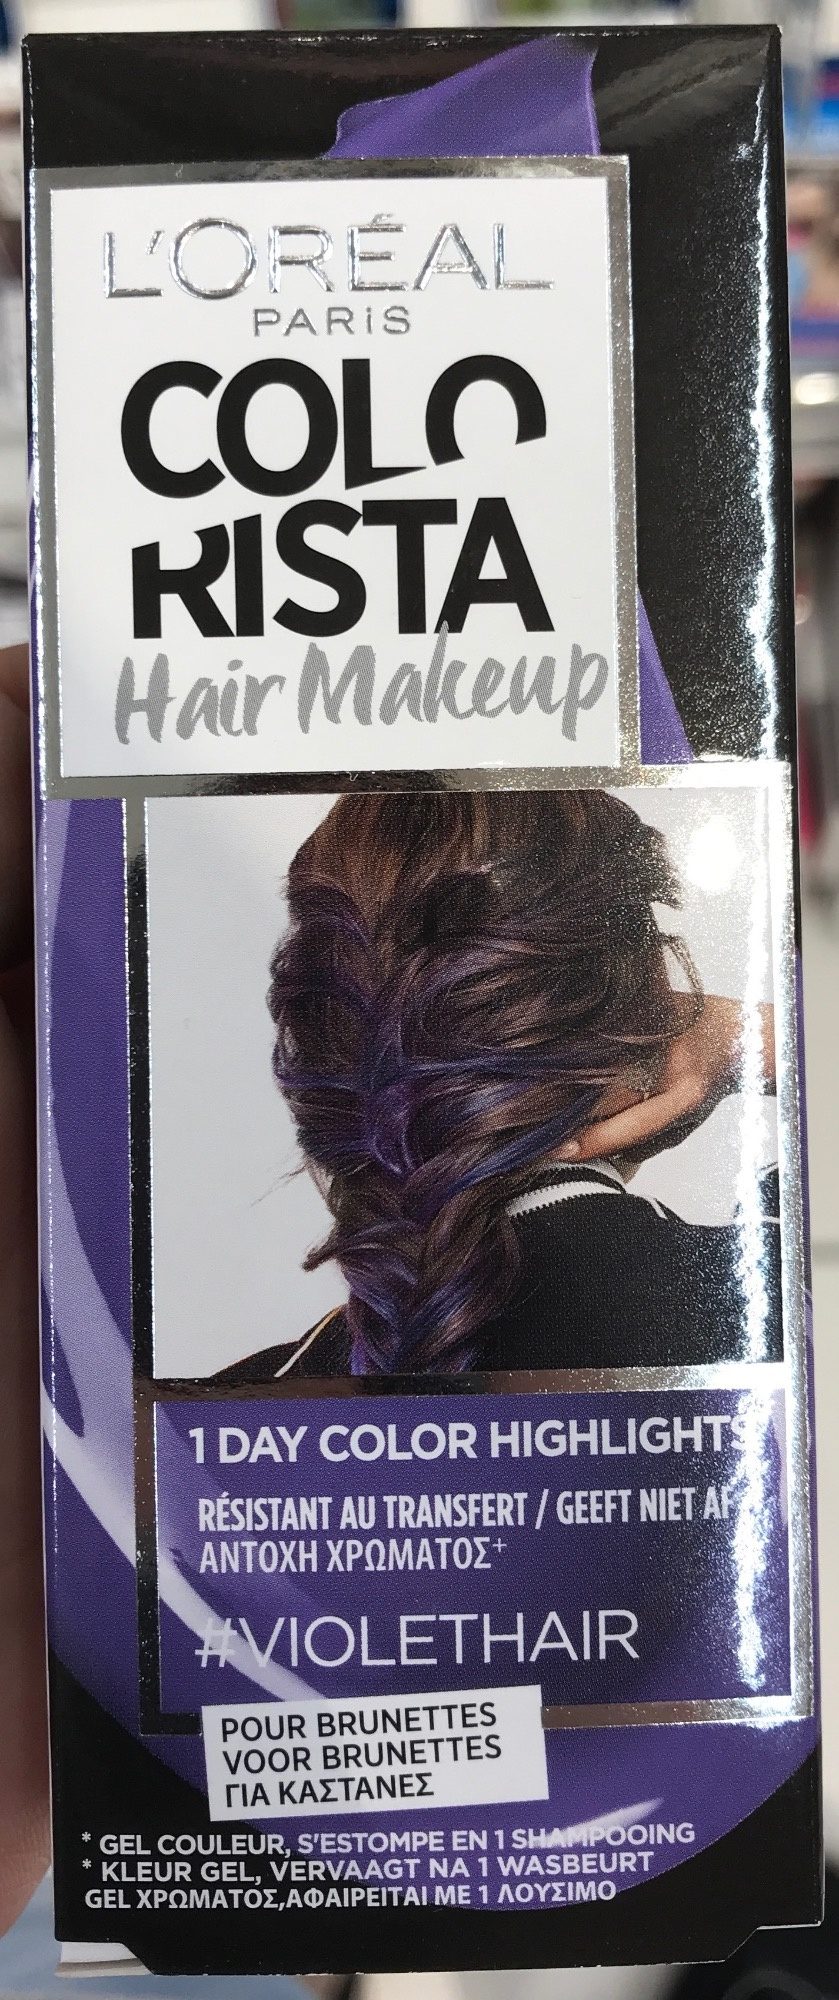 Colorista Hair Makeup 1 Day Color Highlights #VioletHair pour brunettes - Product - fr